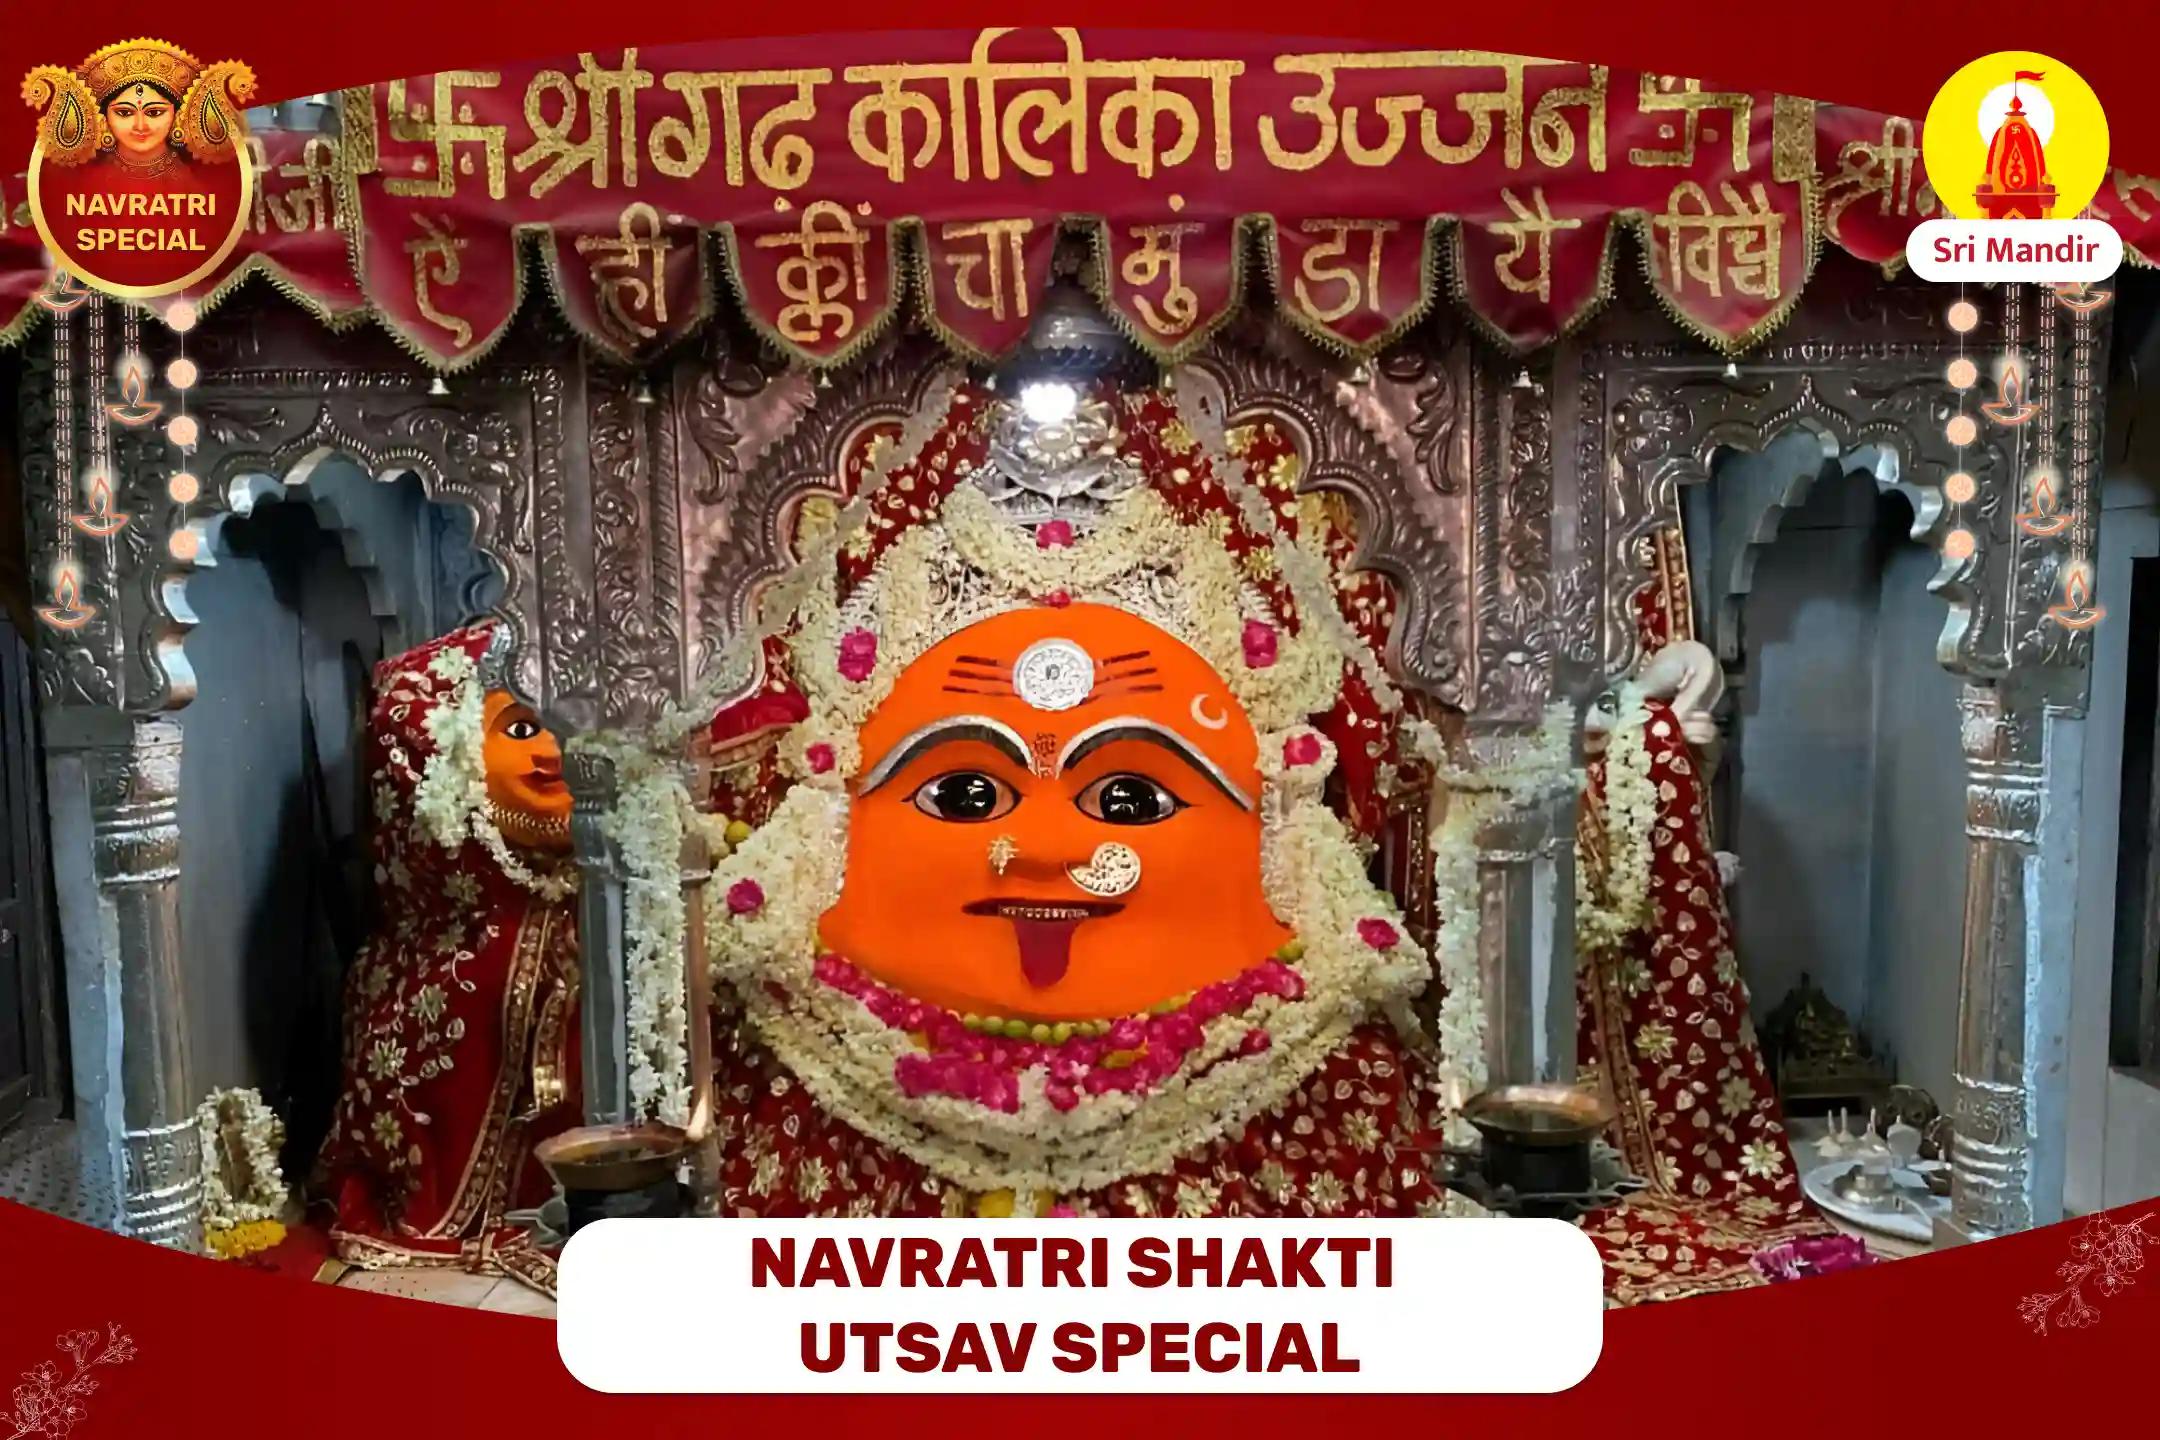 Navratri Shakti Utsav Special Navadurga Yagya and Nav Kumarika Bhoj & Pujan